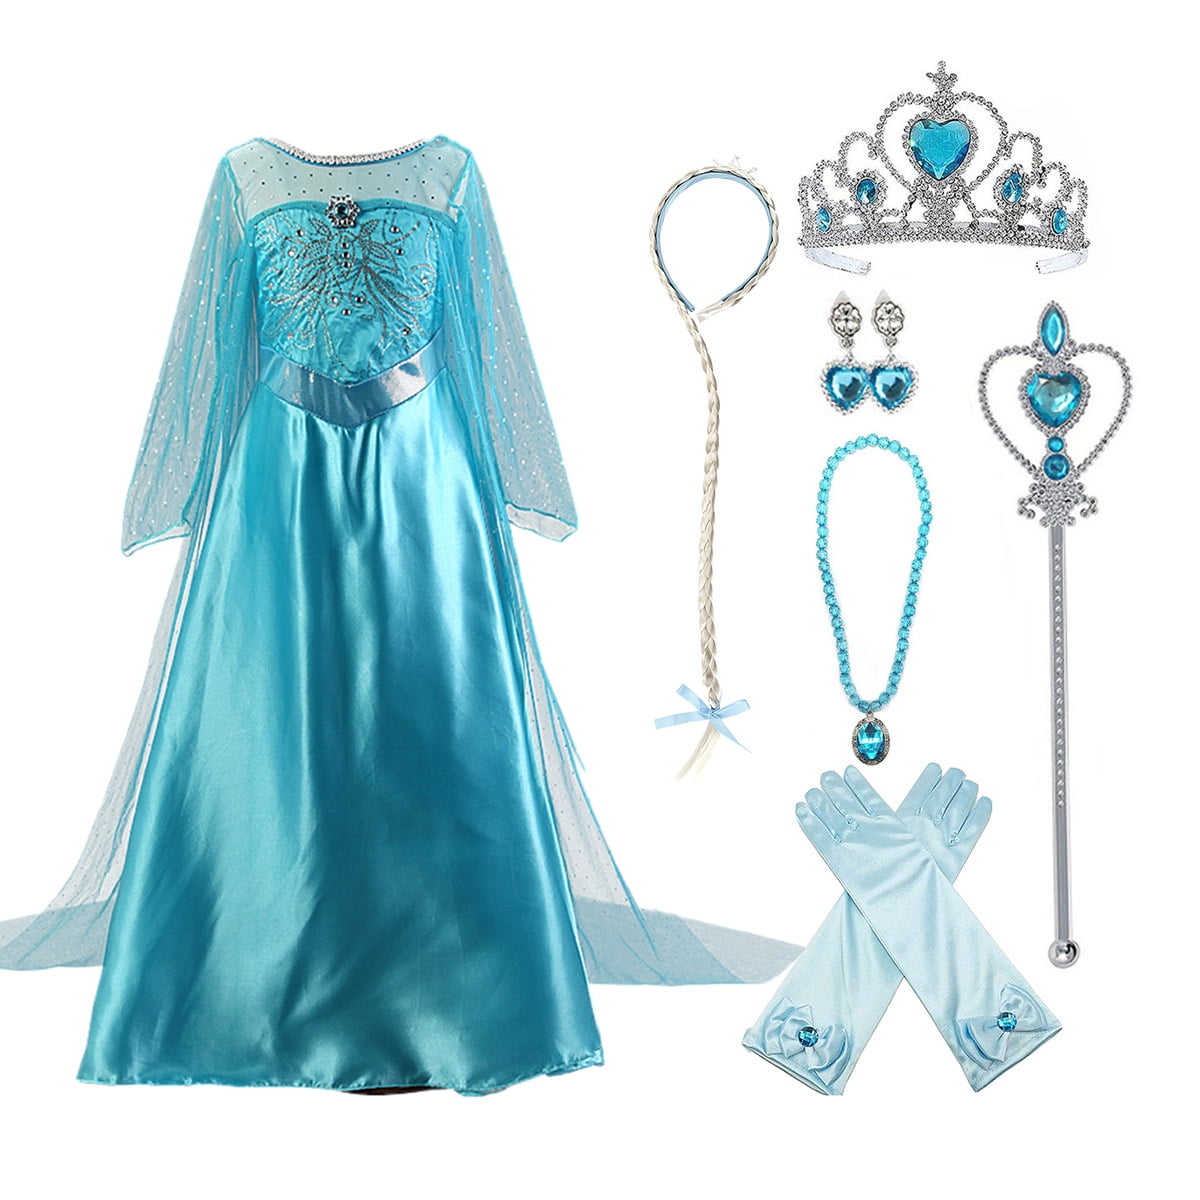 Koveinc Princess Costume Party Dress Little Girls Cosplay Dress up